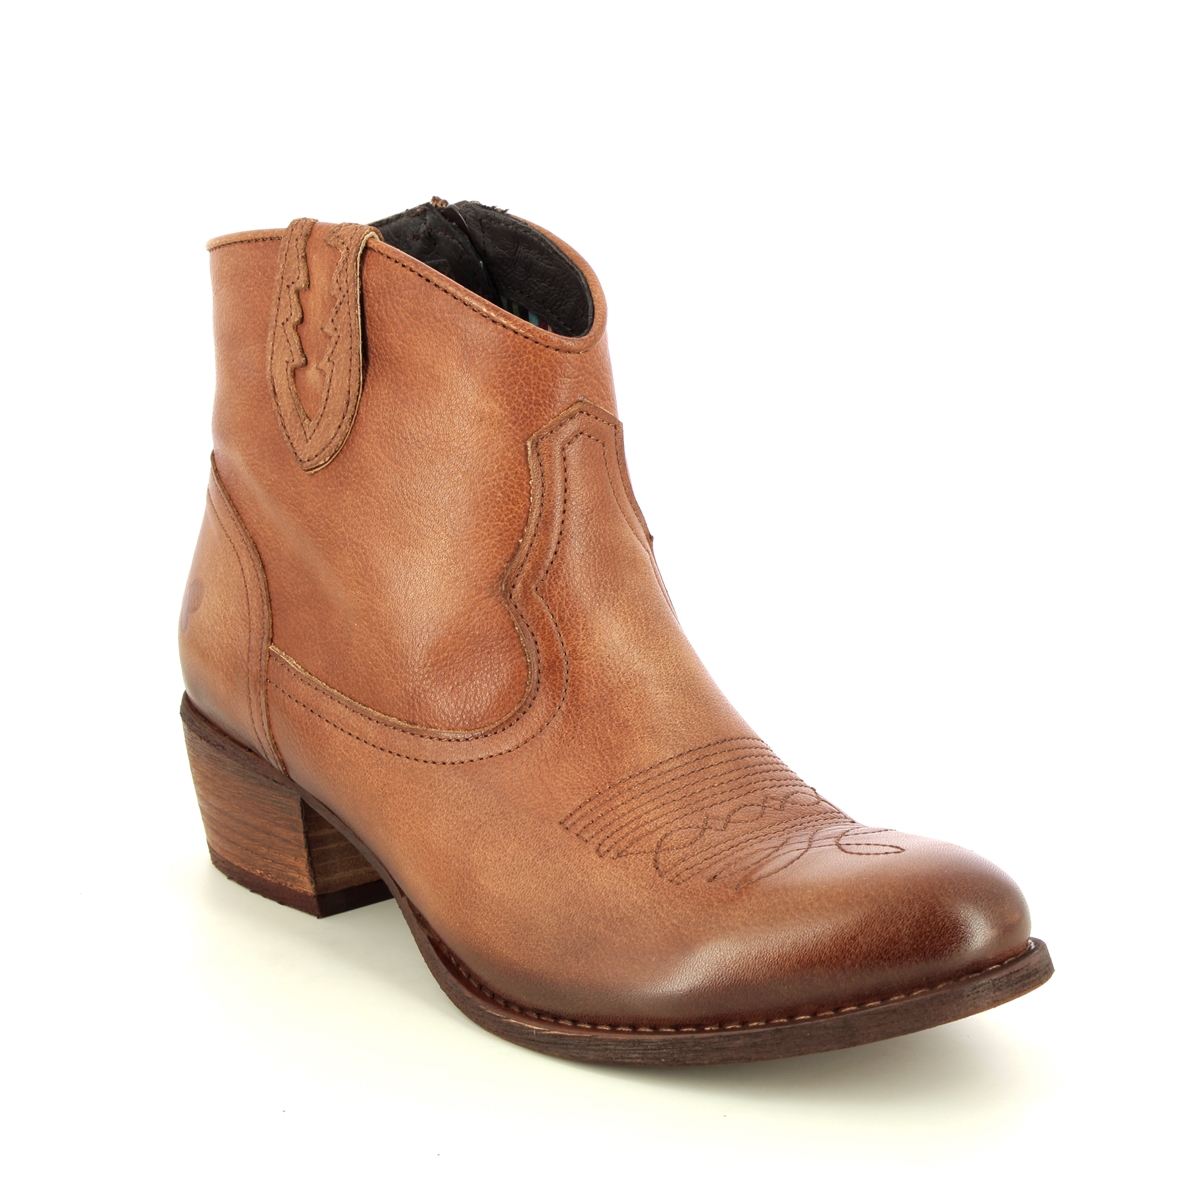 Felmini - Dresa  Cowboy (Tan Leather ) B504-11 In Size 38 In Plain Tan Leather